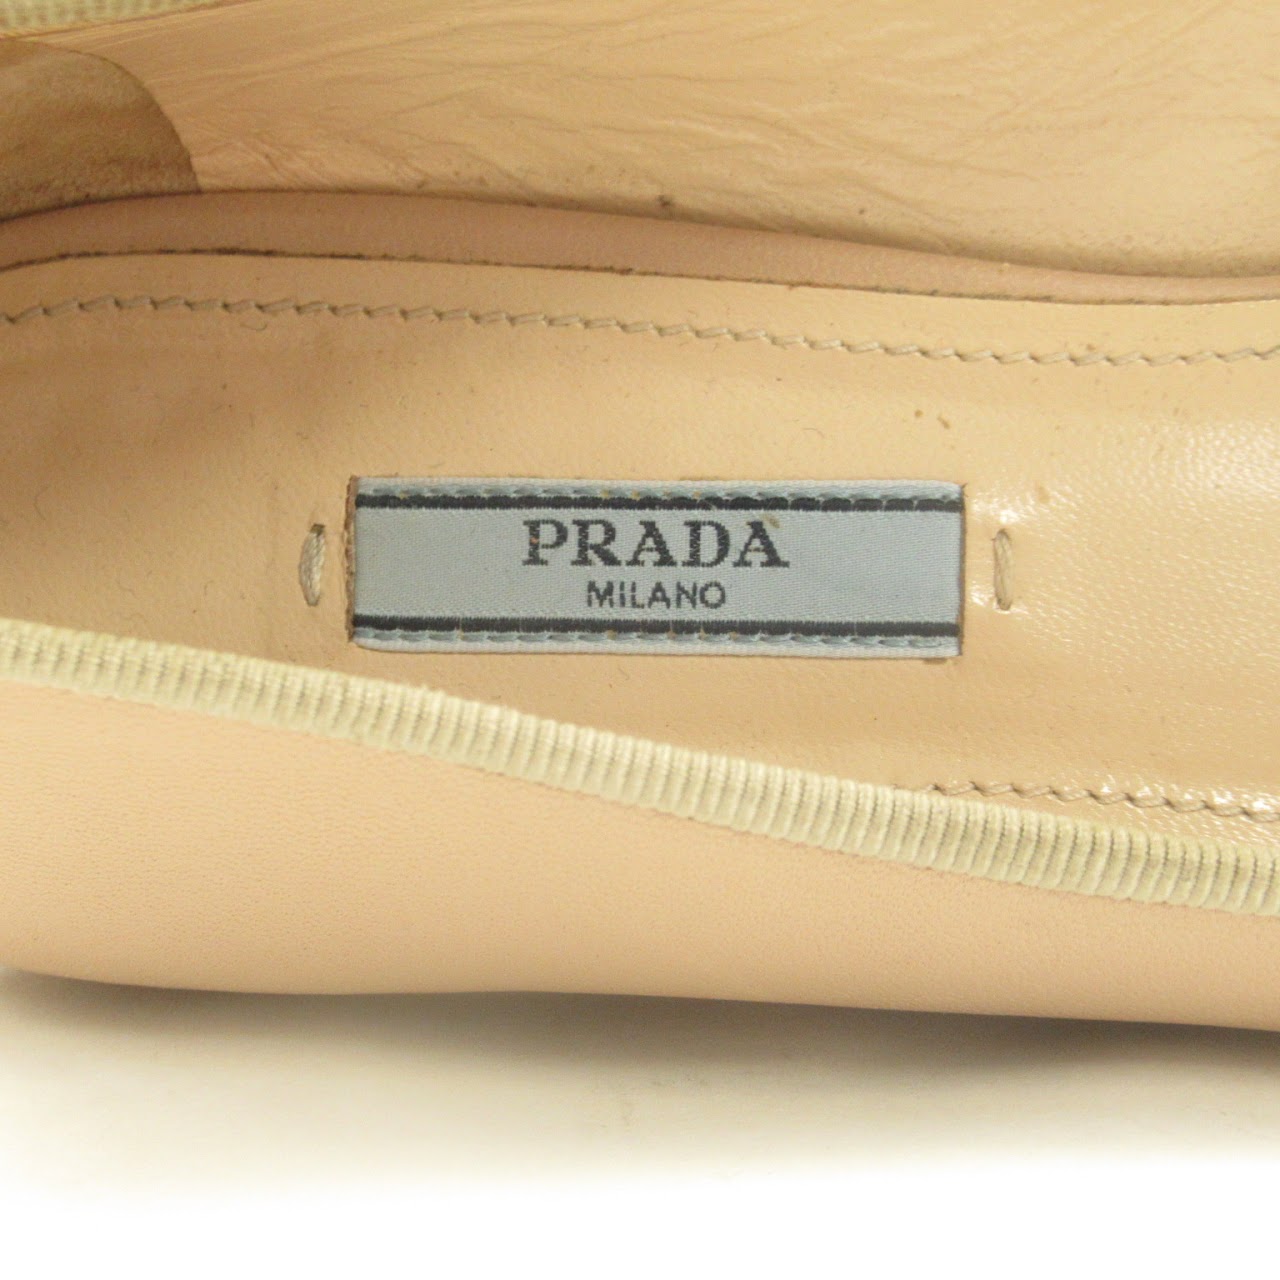 Prada Blush Leather Flats